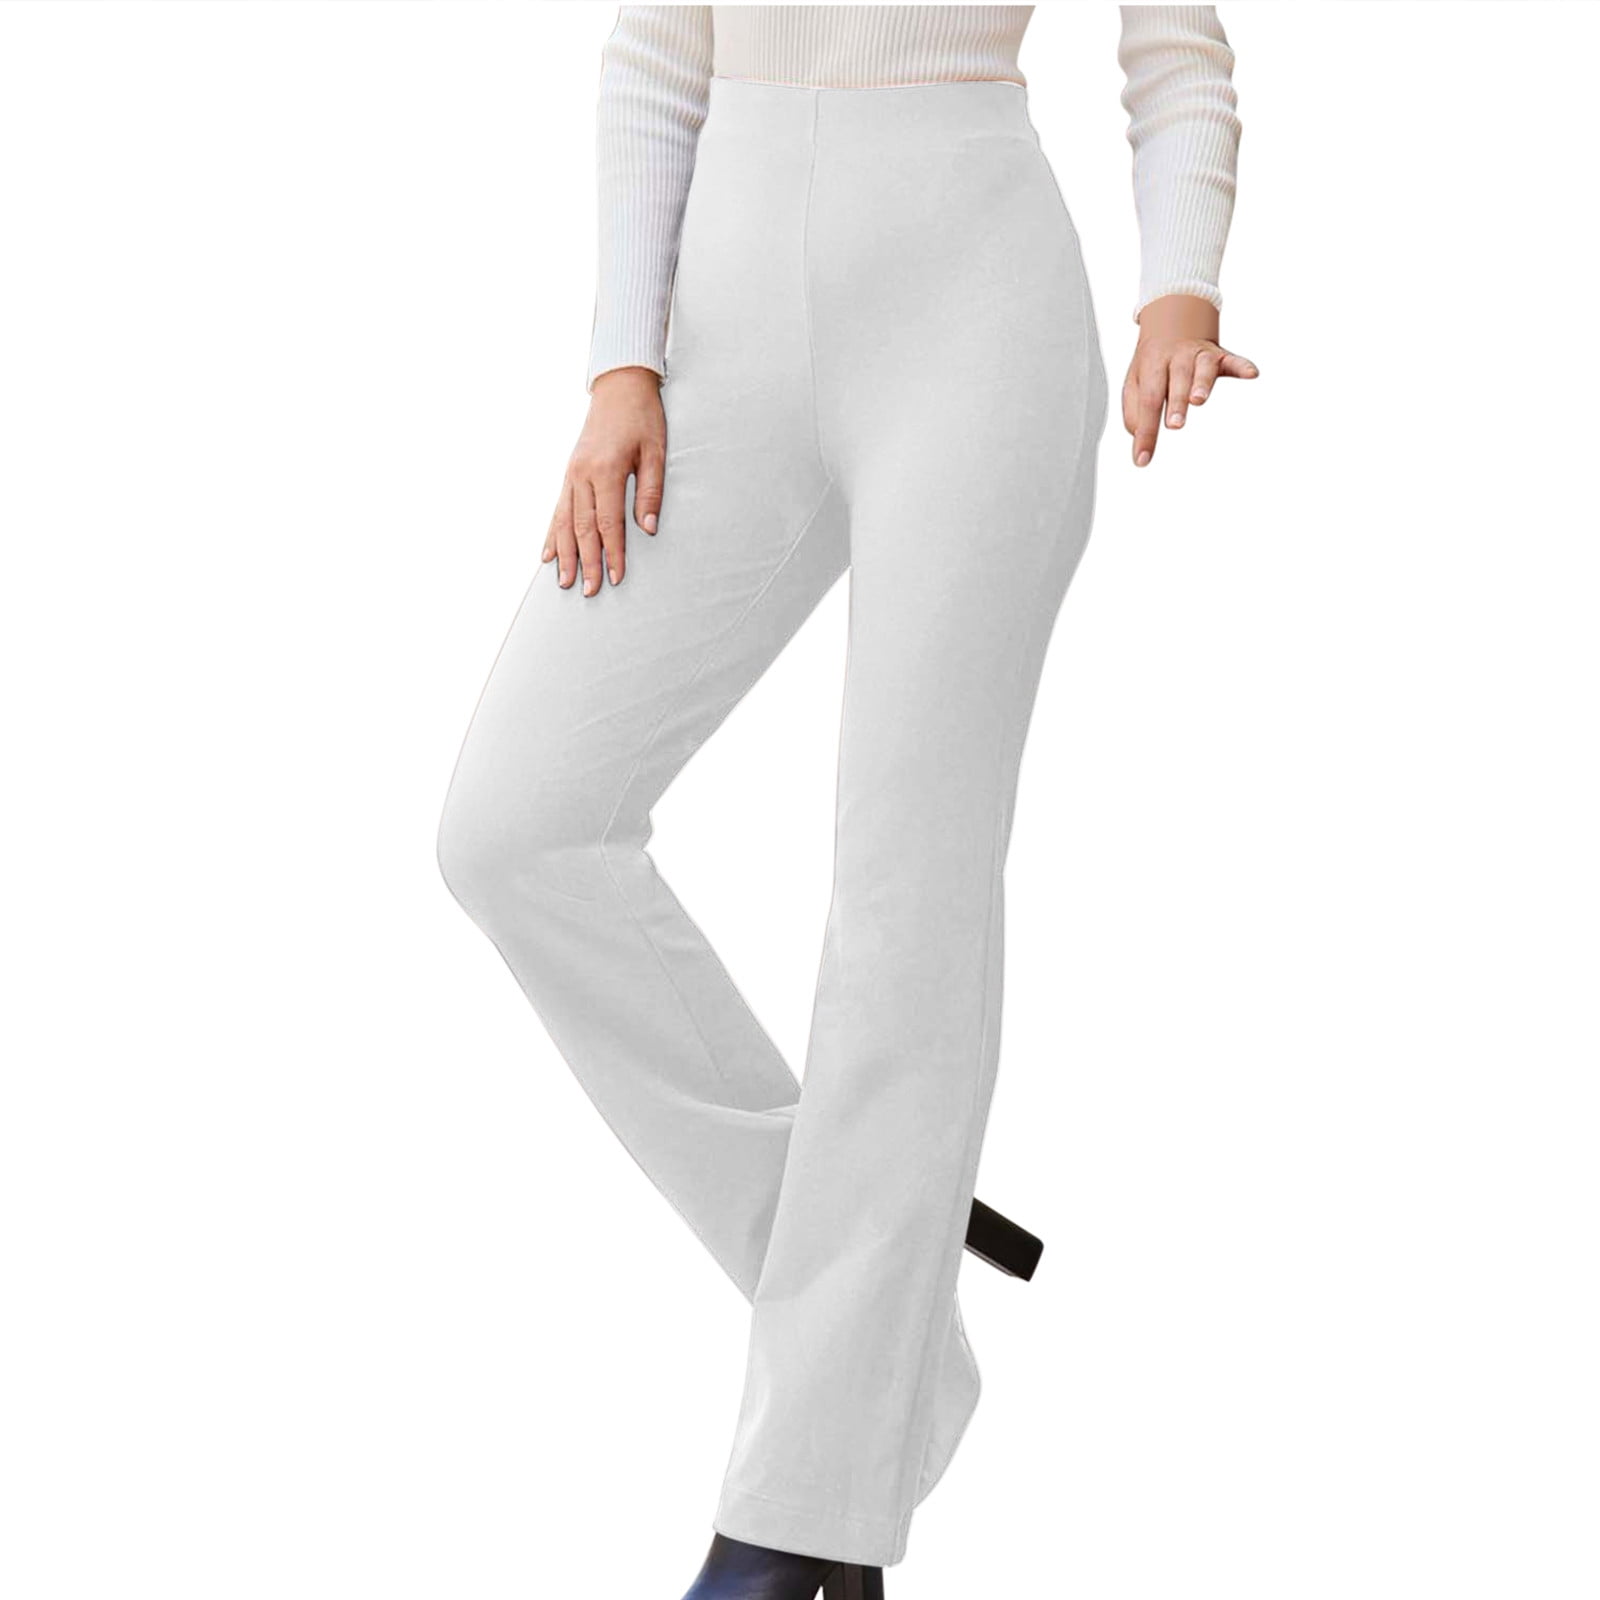 white dress pants for women